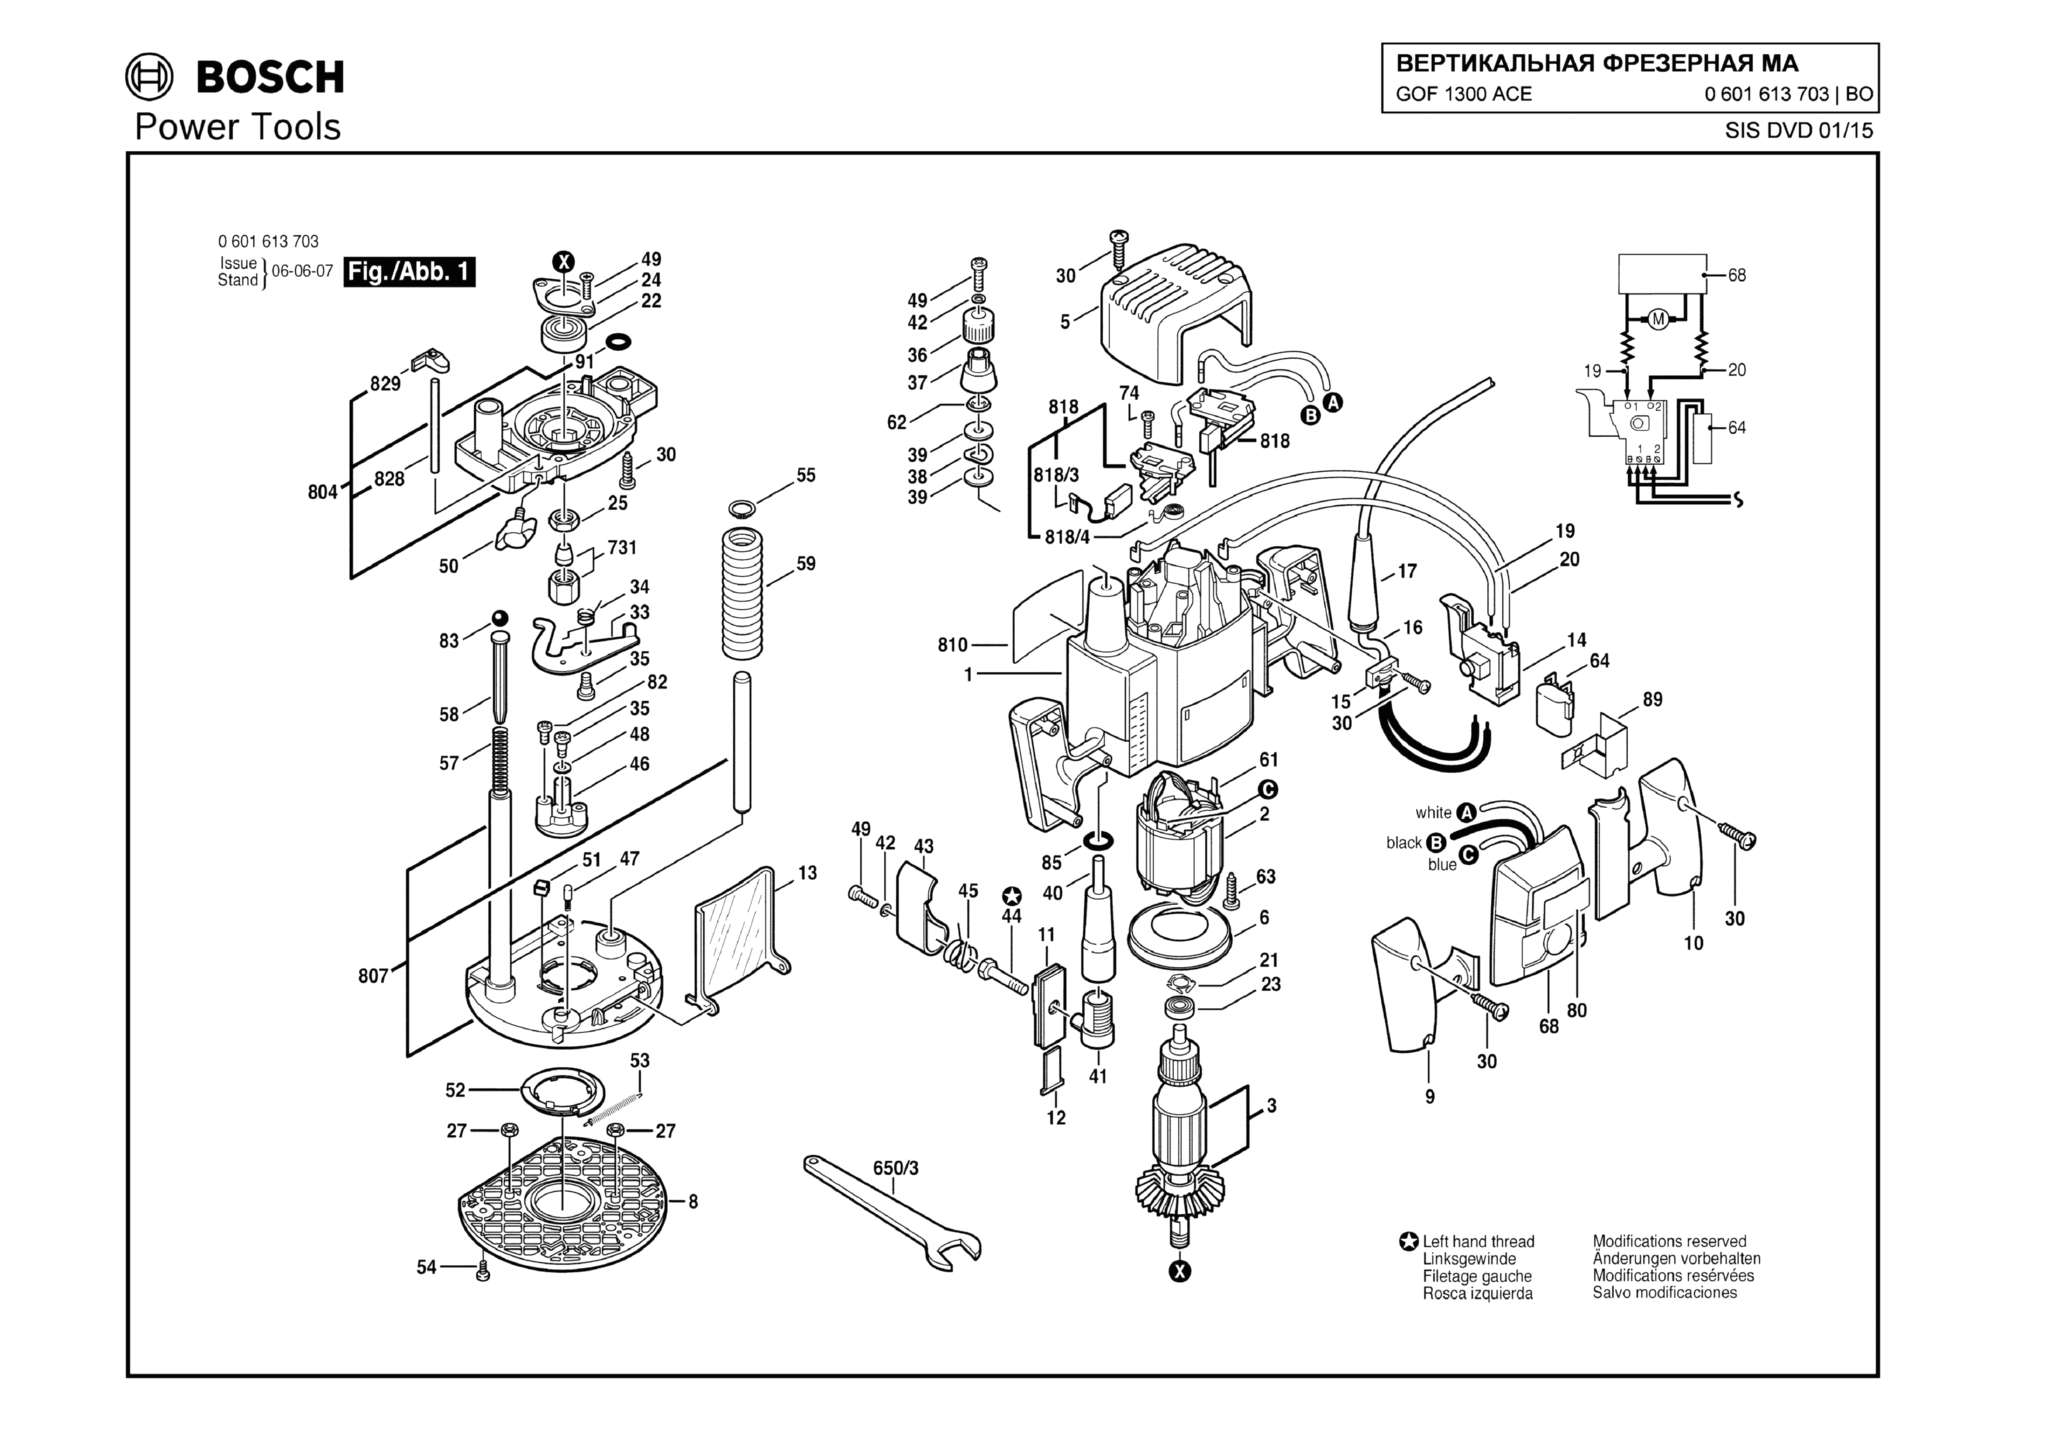 Запчасти, схема и деталировка Bosch GOF 1300 ACE (ТИП 0601613703)